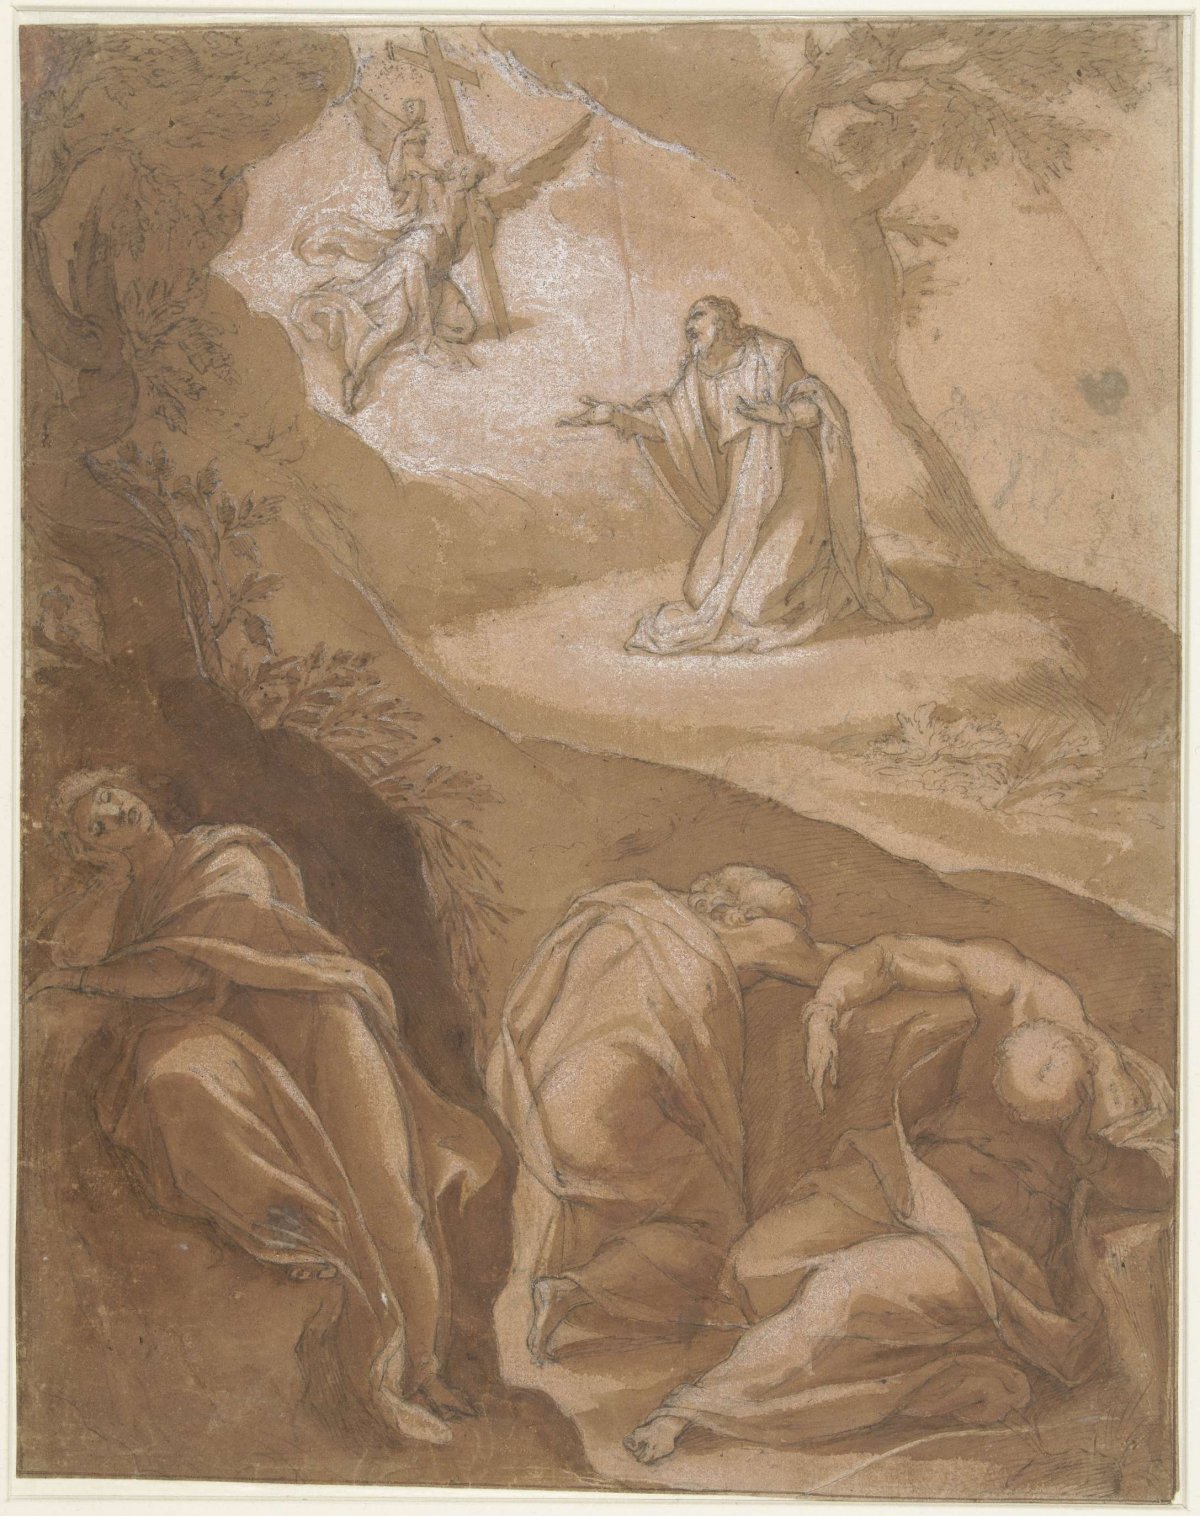 Christus in Gethsemane, Cristoforo Pomarancio, 1585 - 1626